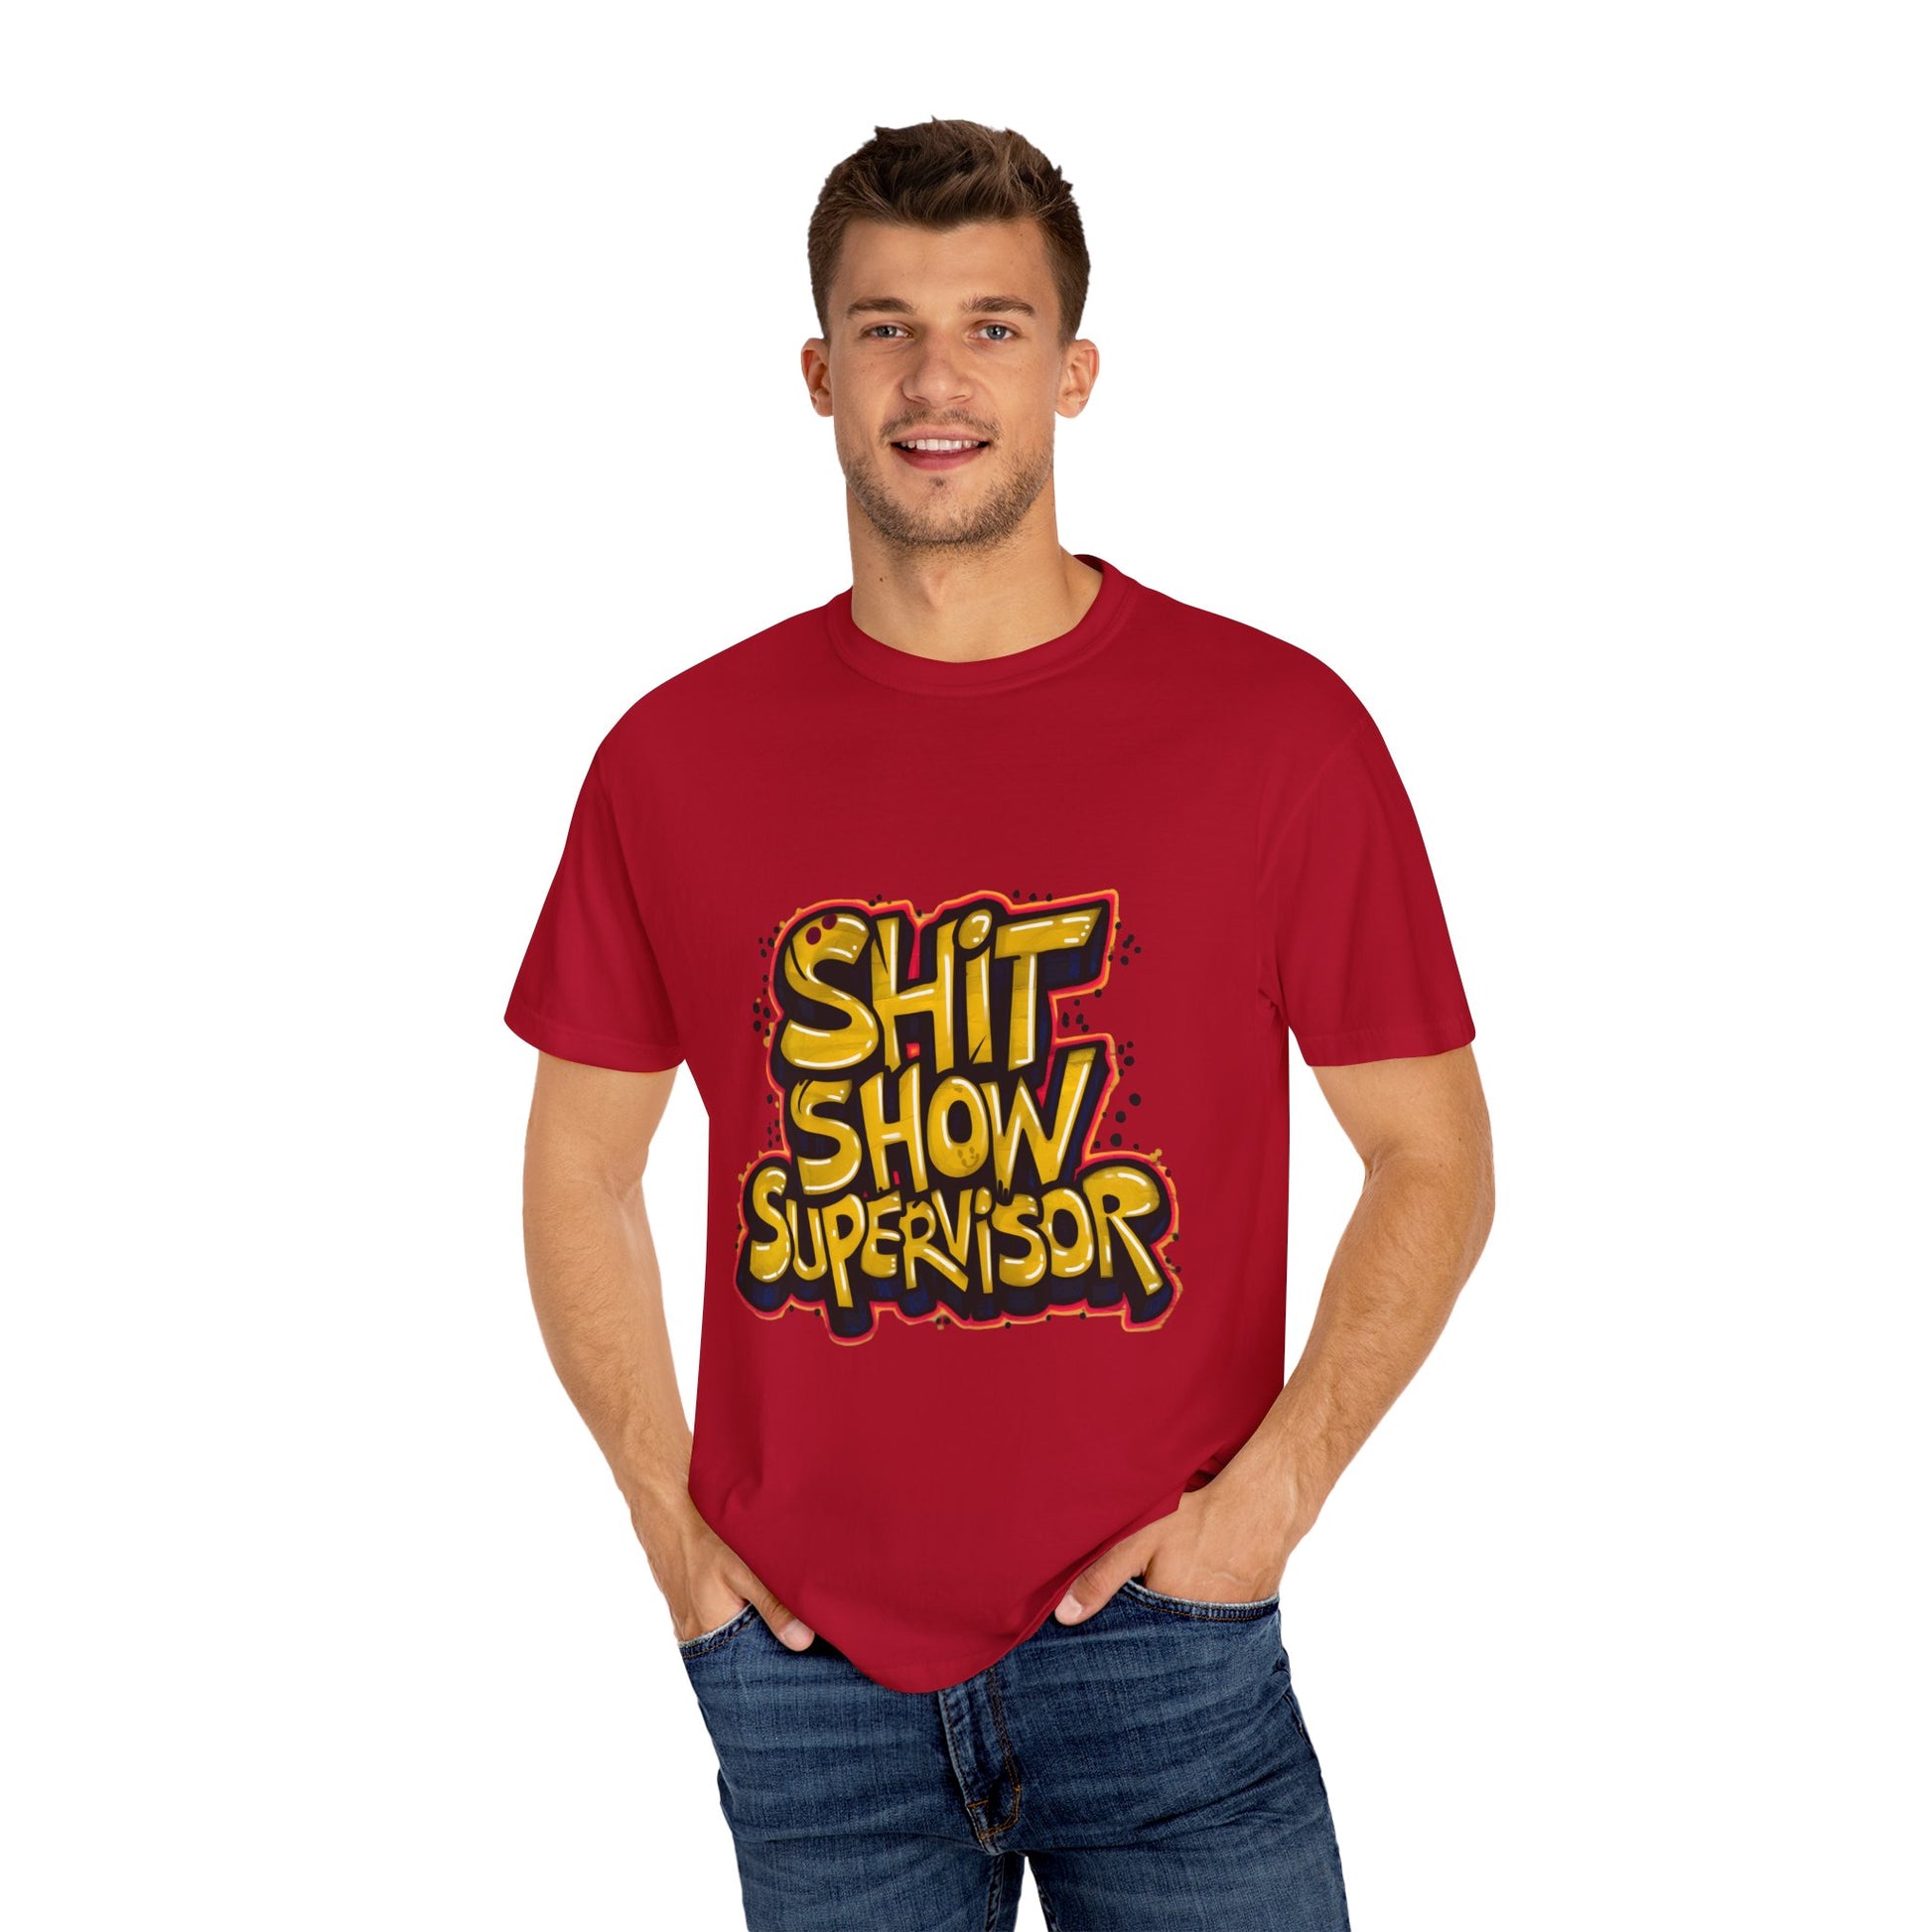 Shit Show Supervisor Urban Sarcastic Graphic Unisex Garment Dyed T-shirt Cotton Funny Humorous Graphic Soft Premium Unisex Men Women Red T-shirt Birthday Gift-21